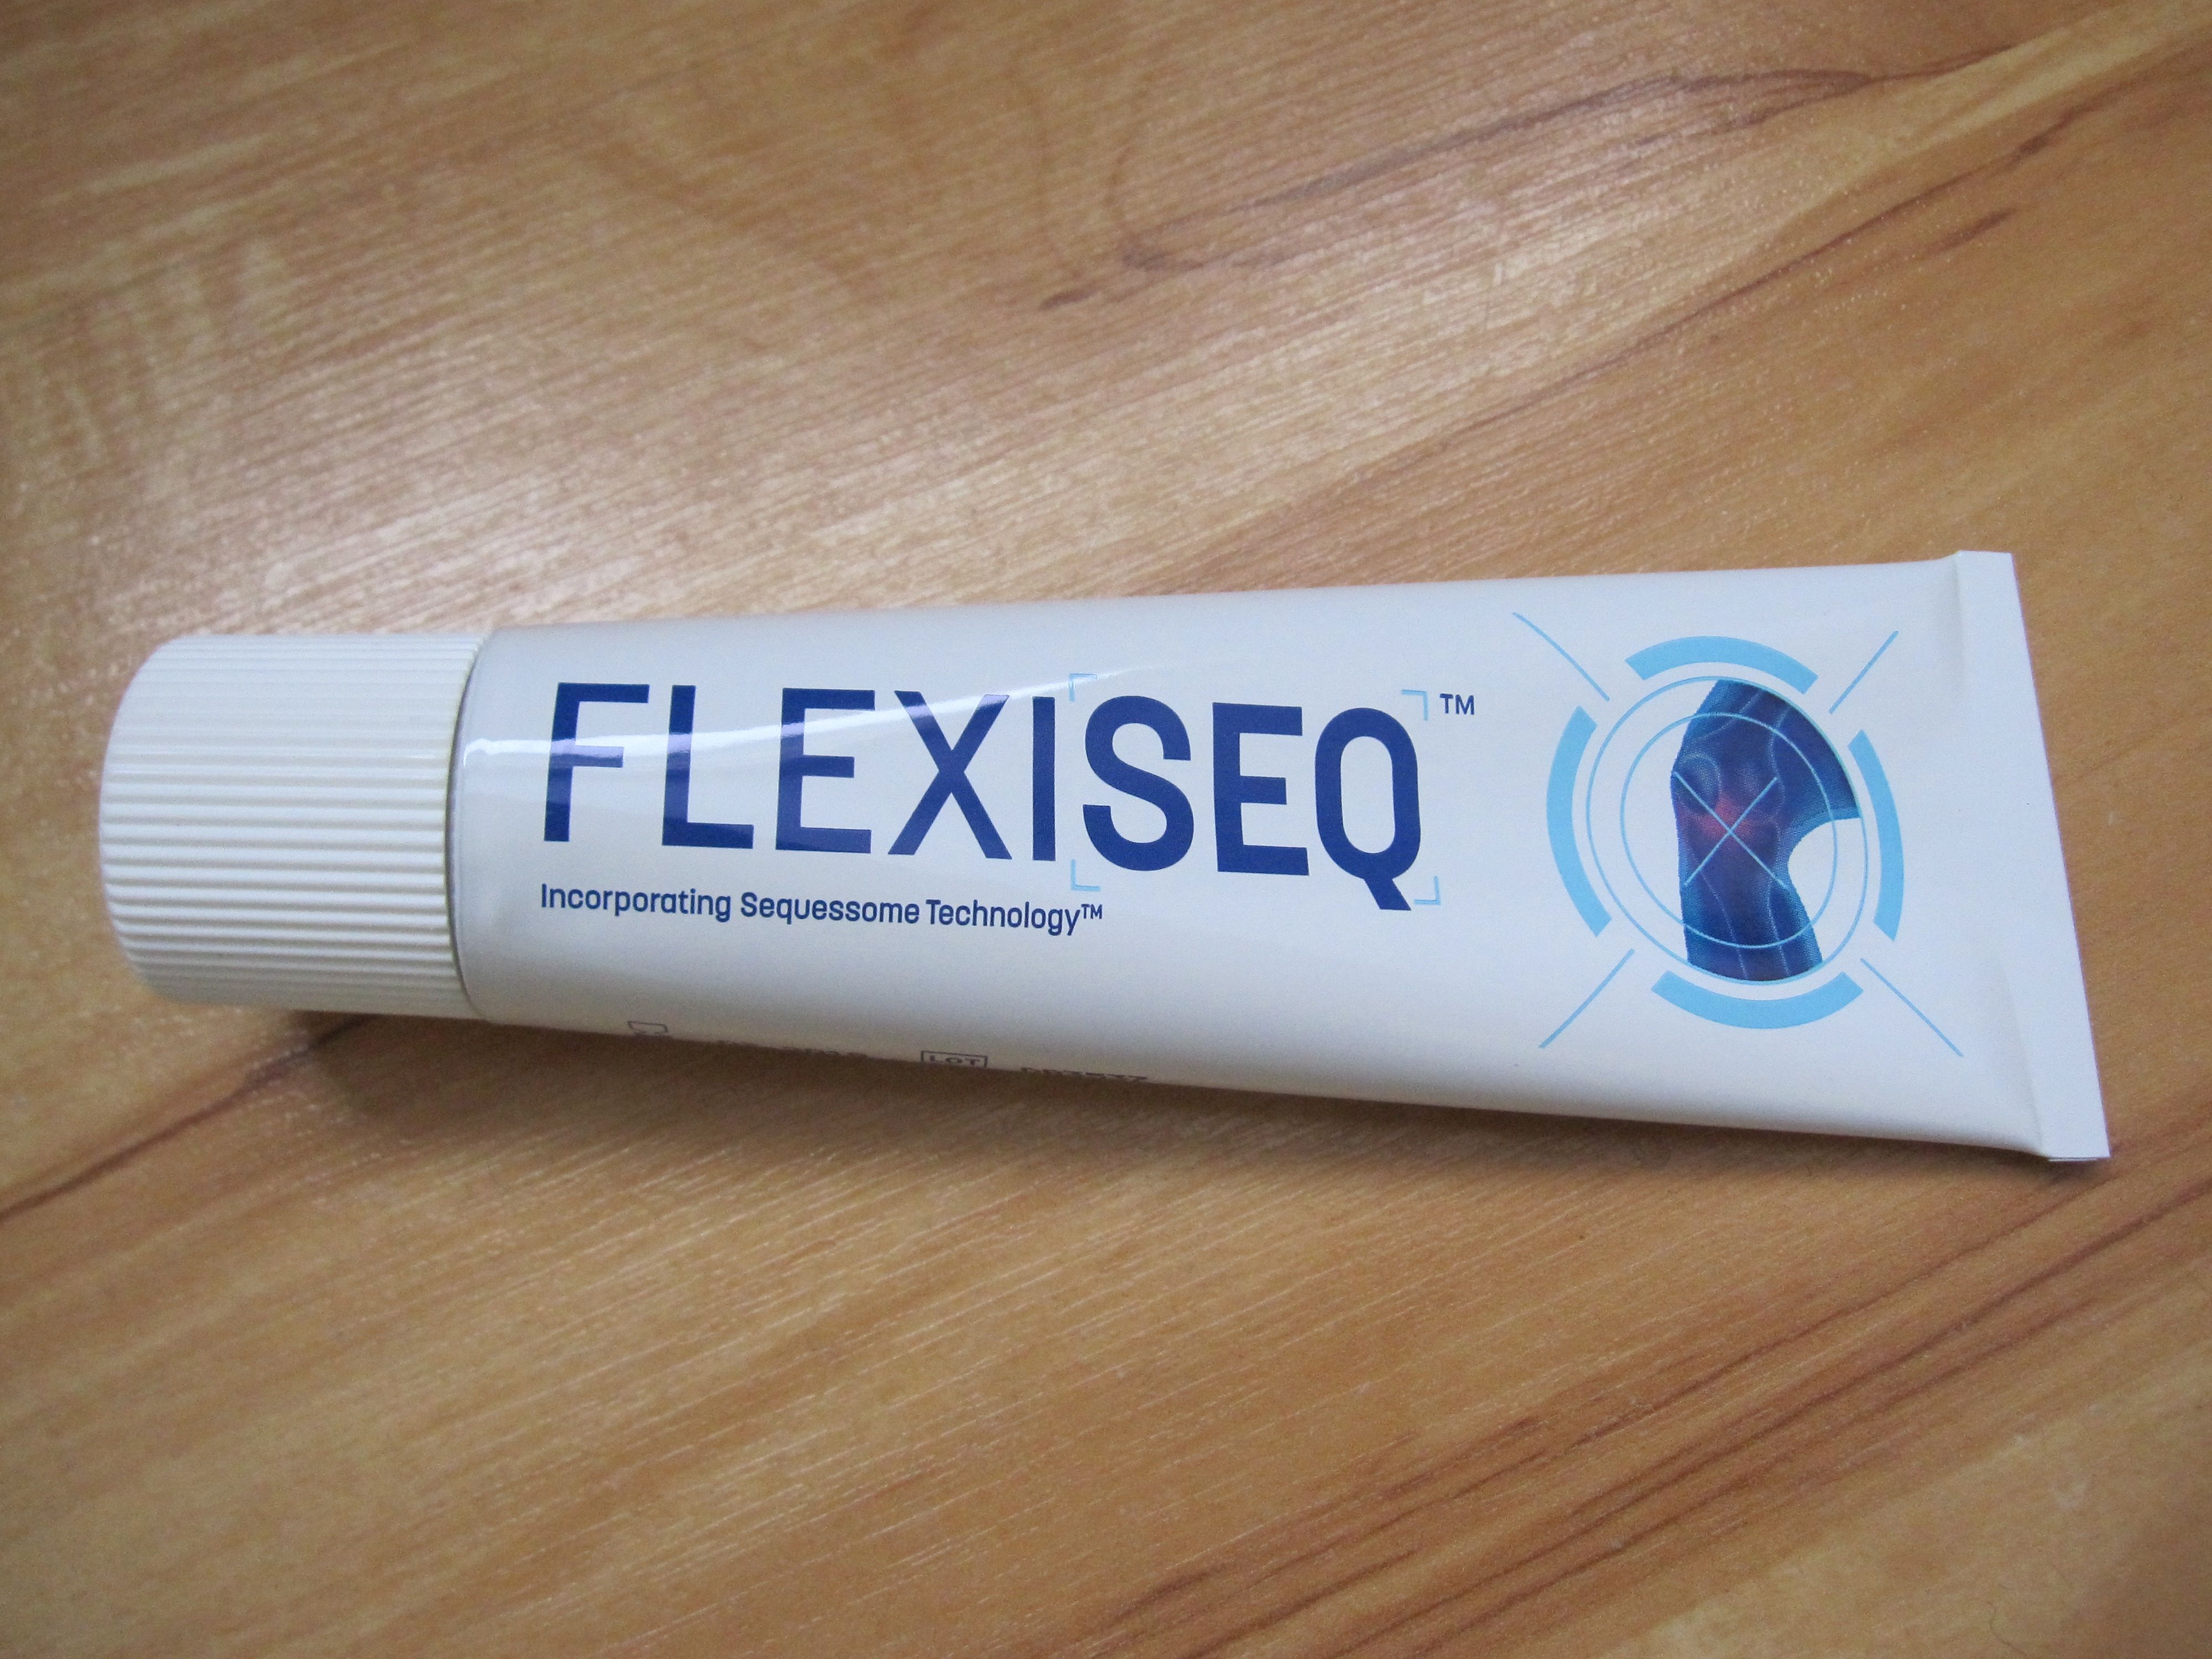 Flexiseq from Pro Bono Bio